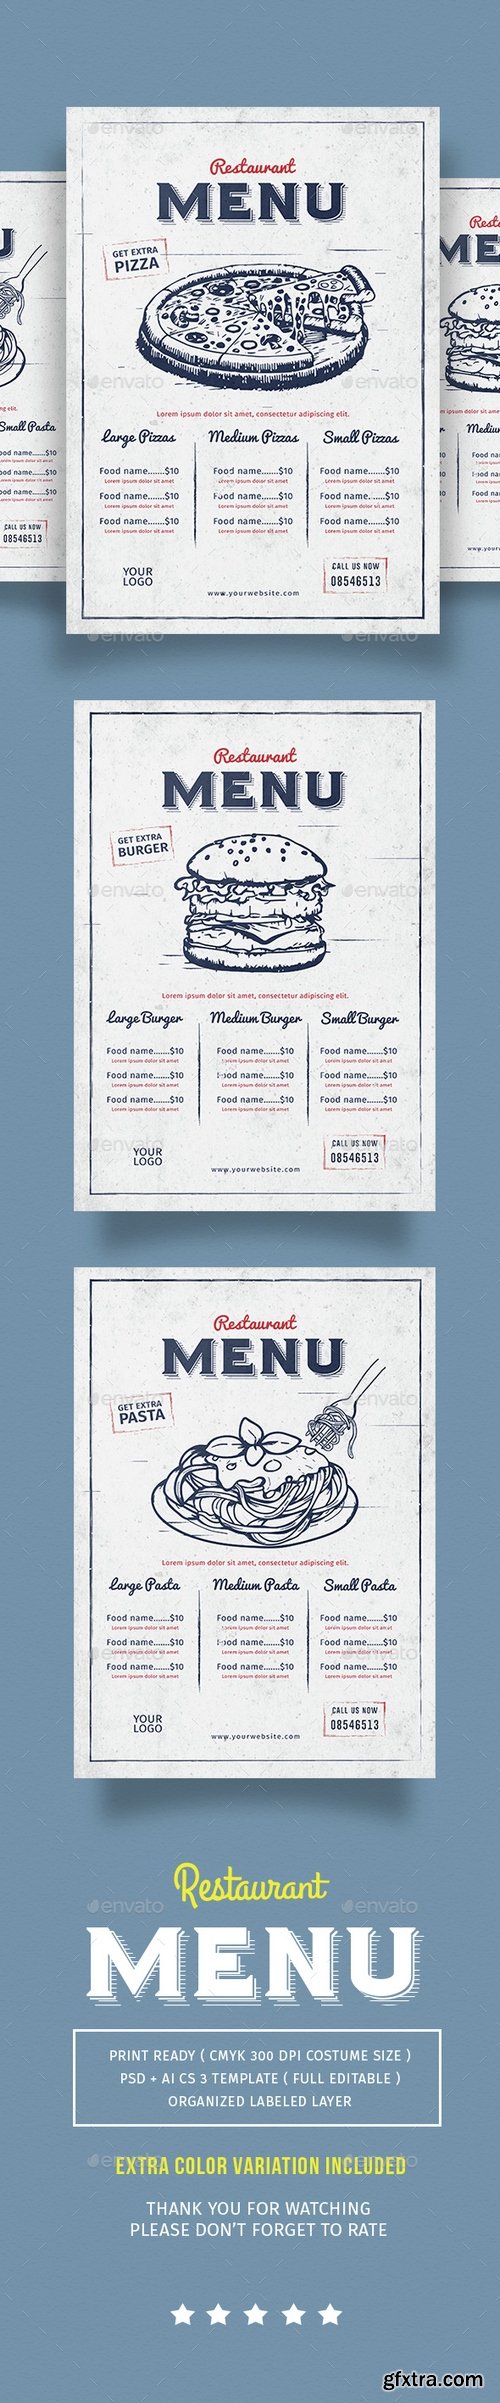 Graphicriver - Vintage Restaurant Menu 14567397